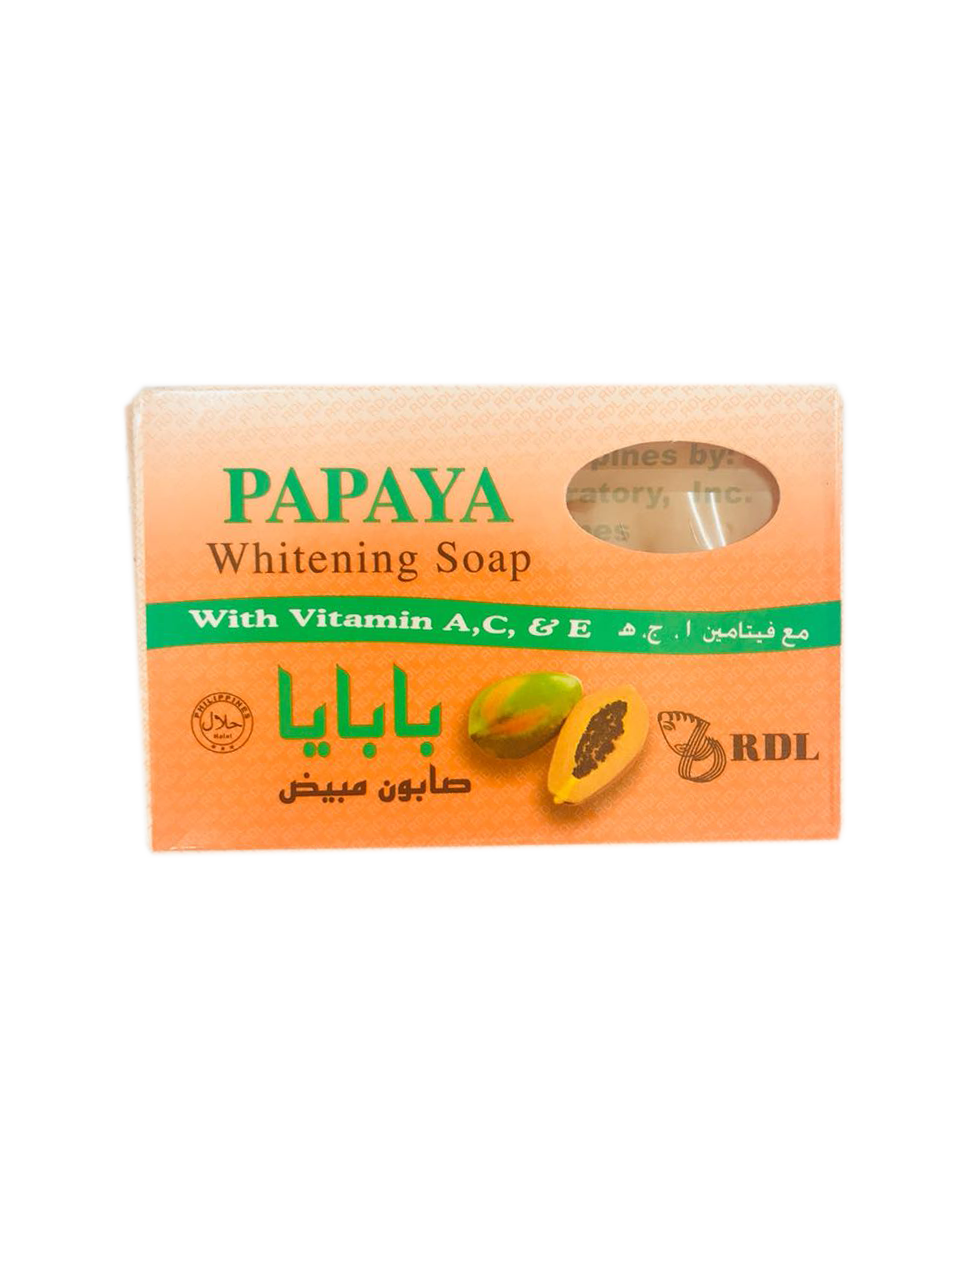 RDL Papaya Whitening Soap with Vit. A,C & E